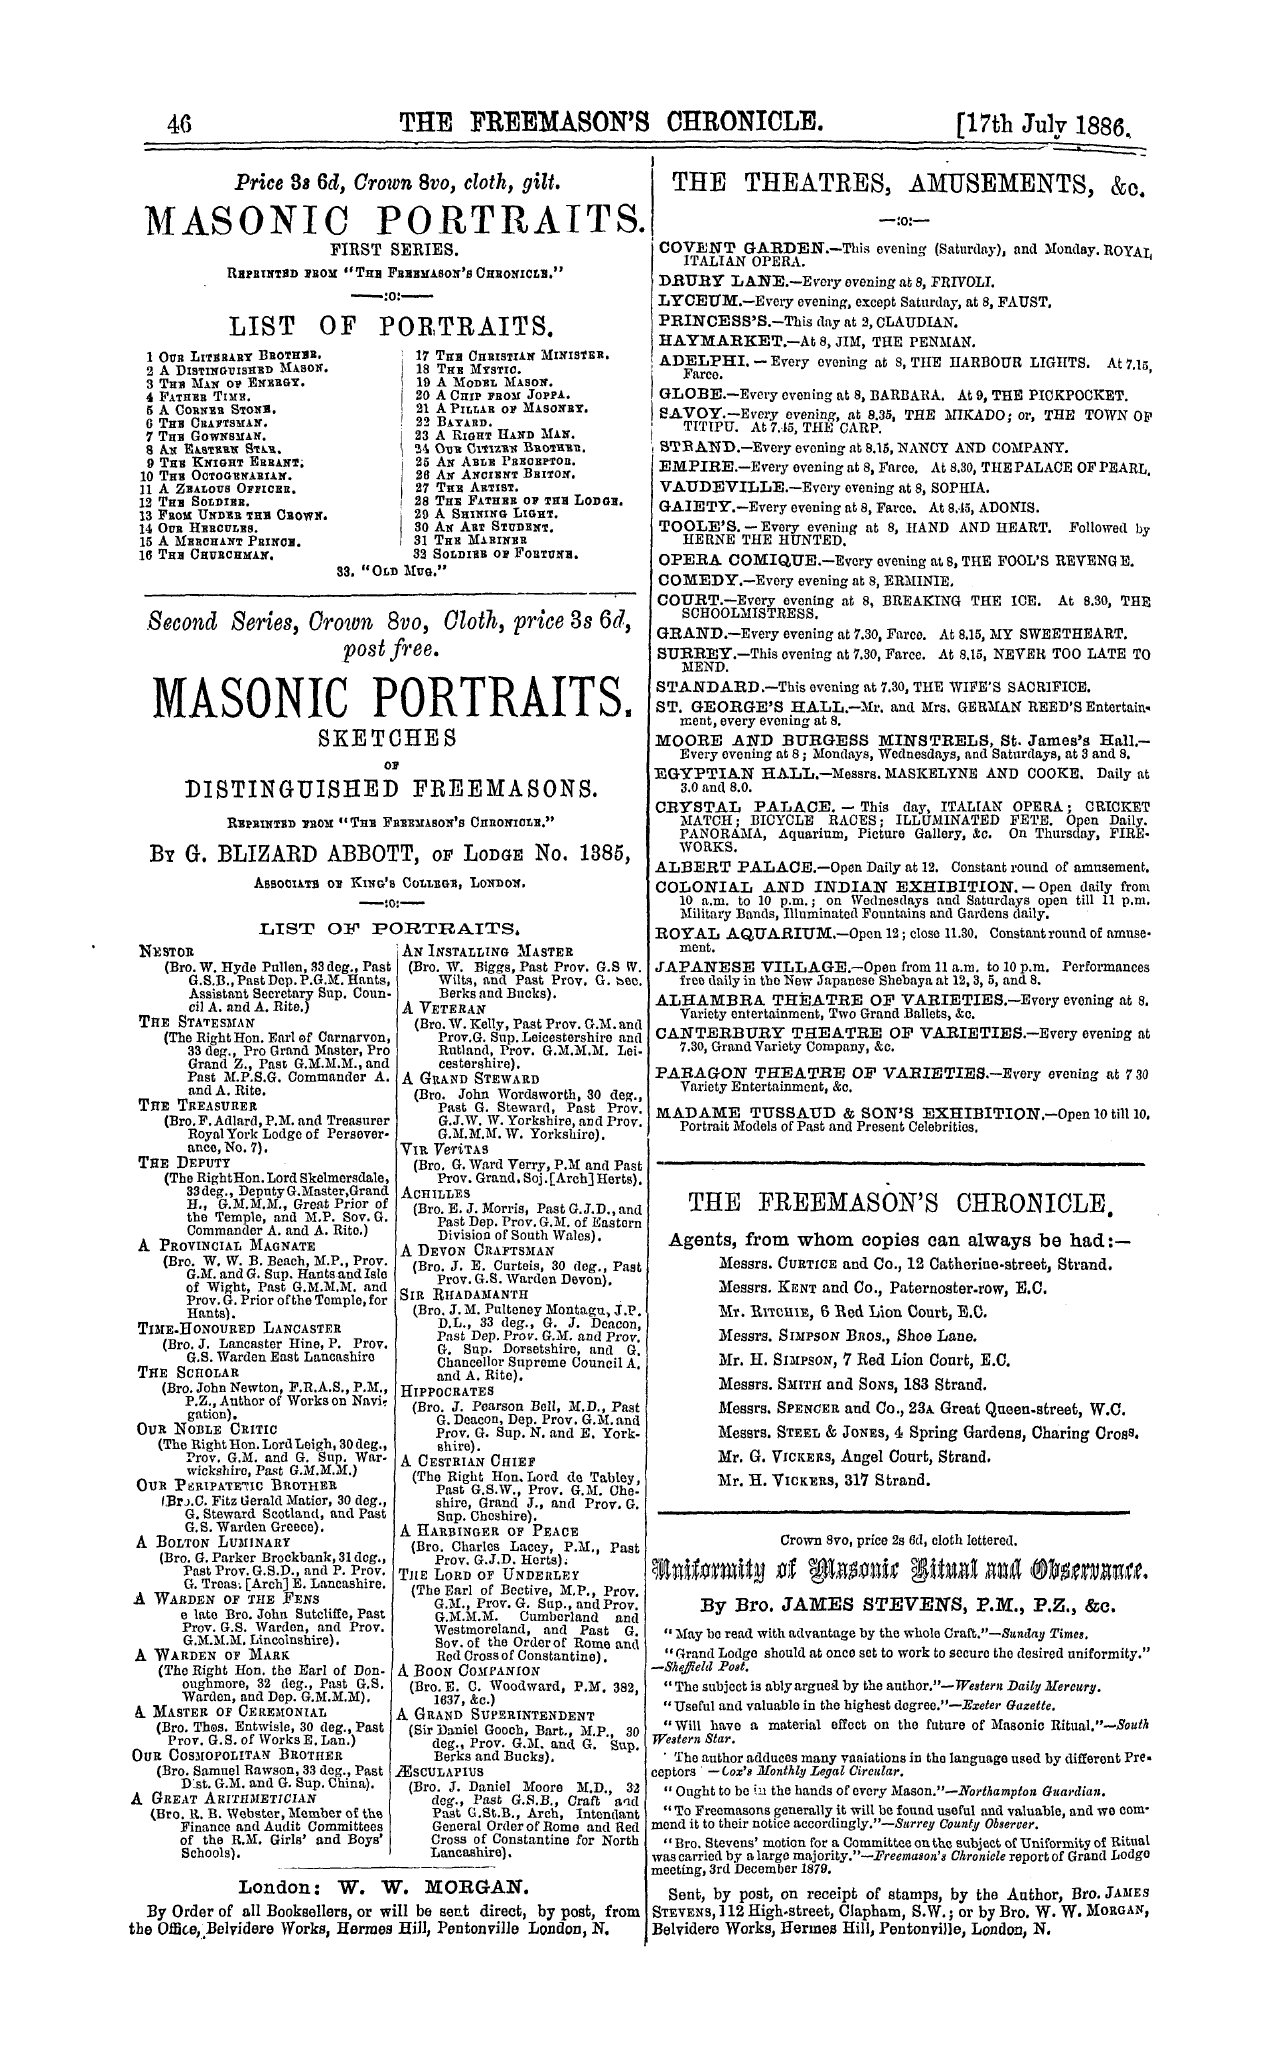 The Freemason's Chronicle: 1886-07-17: 14